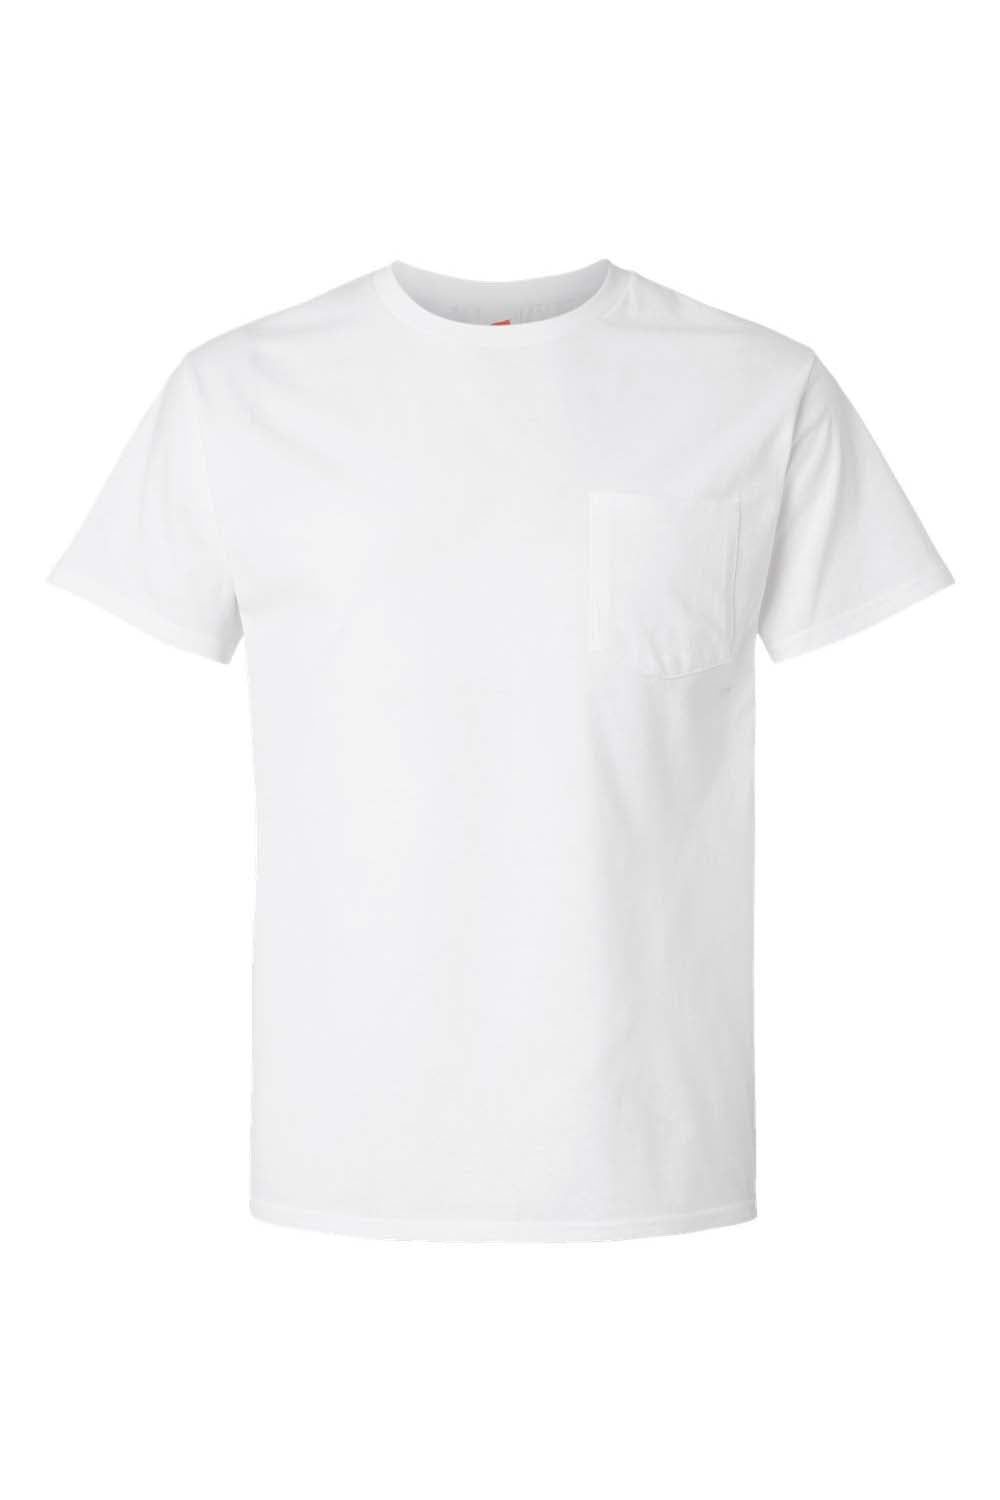 Hanes 5290P Mens Essential Short Sleeve Crewneck T-Shirt w/ Pocket White Flat Front